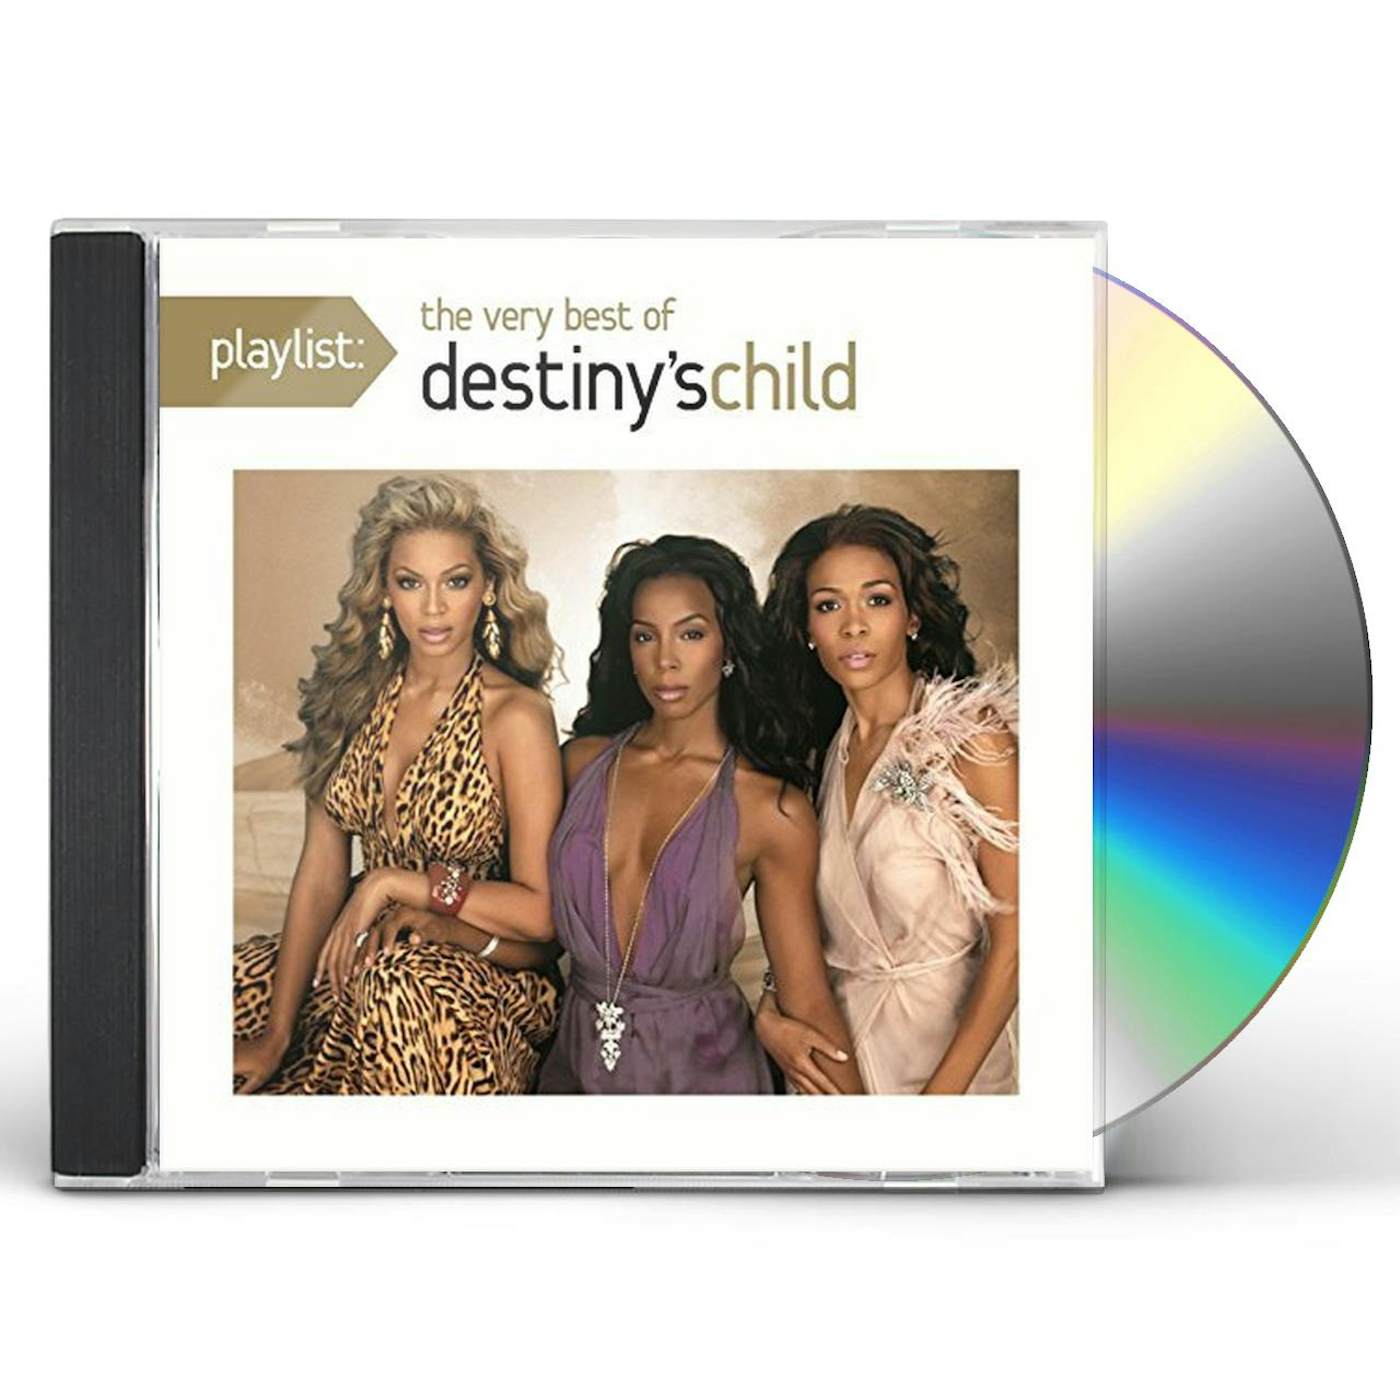 PLAYLIST: THE VERY BEST OF DESTINY'S CHILD CD